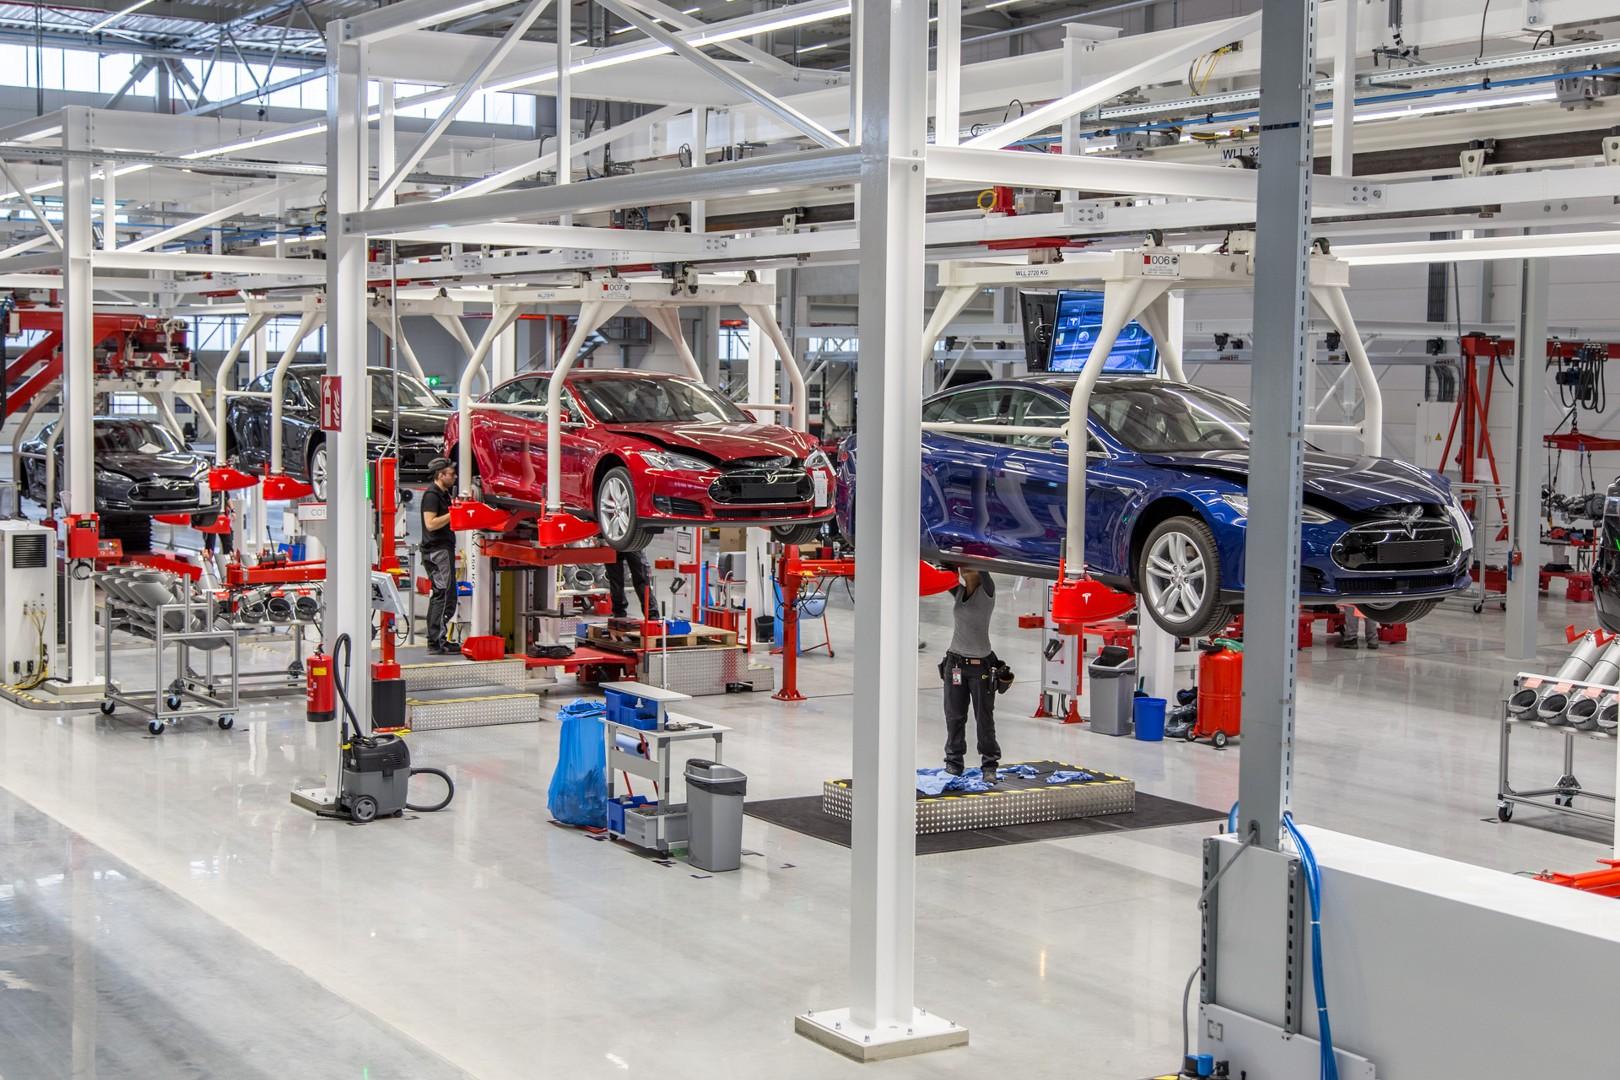 Tesla Open a New Factory to Meet High Demand for Model S